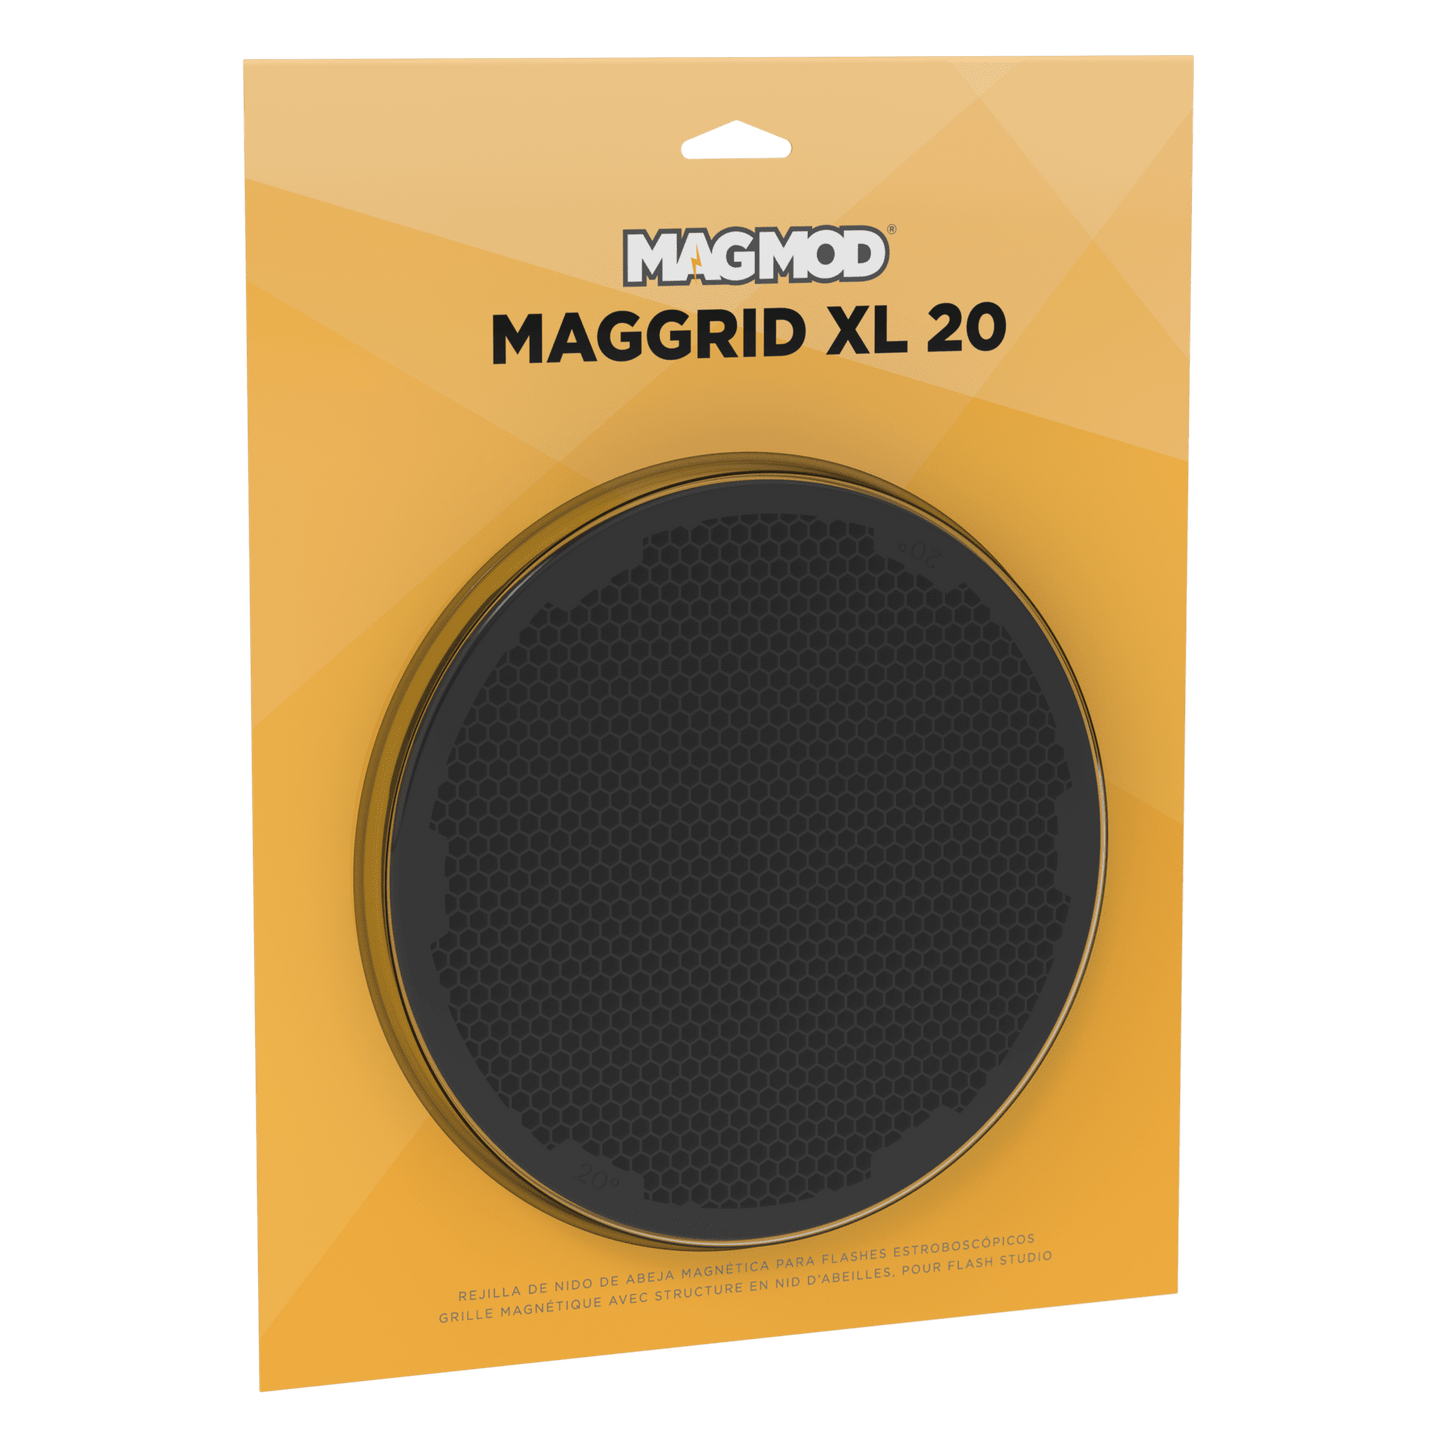 MagGrid XL 20 - MagnetMod